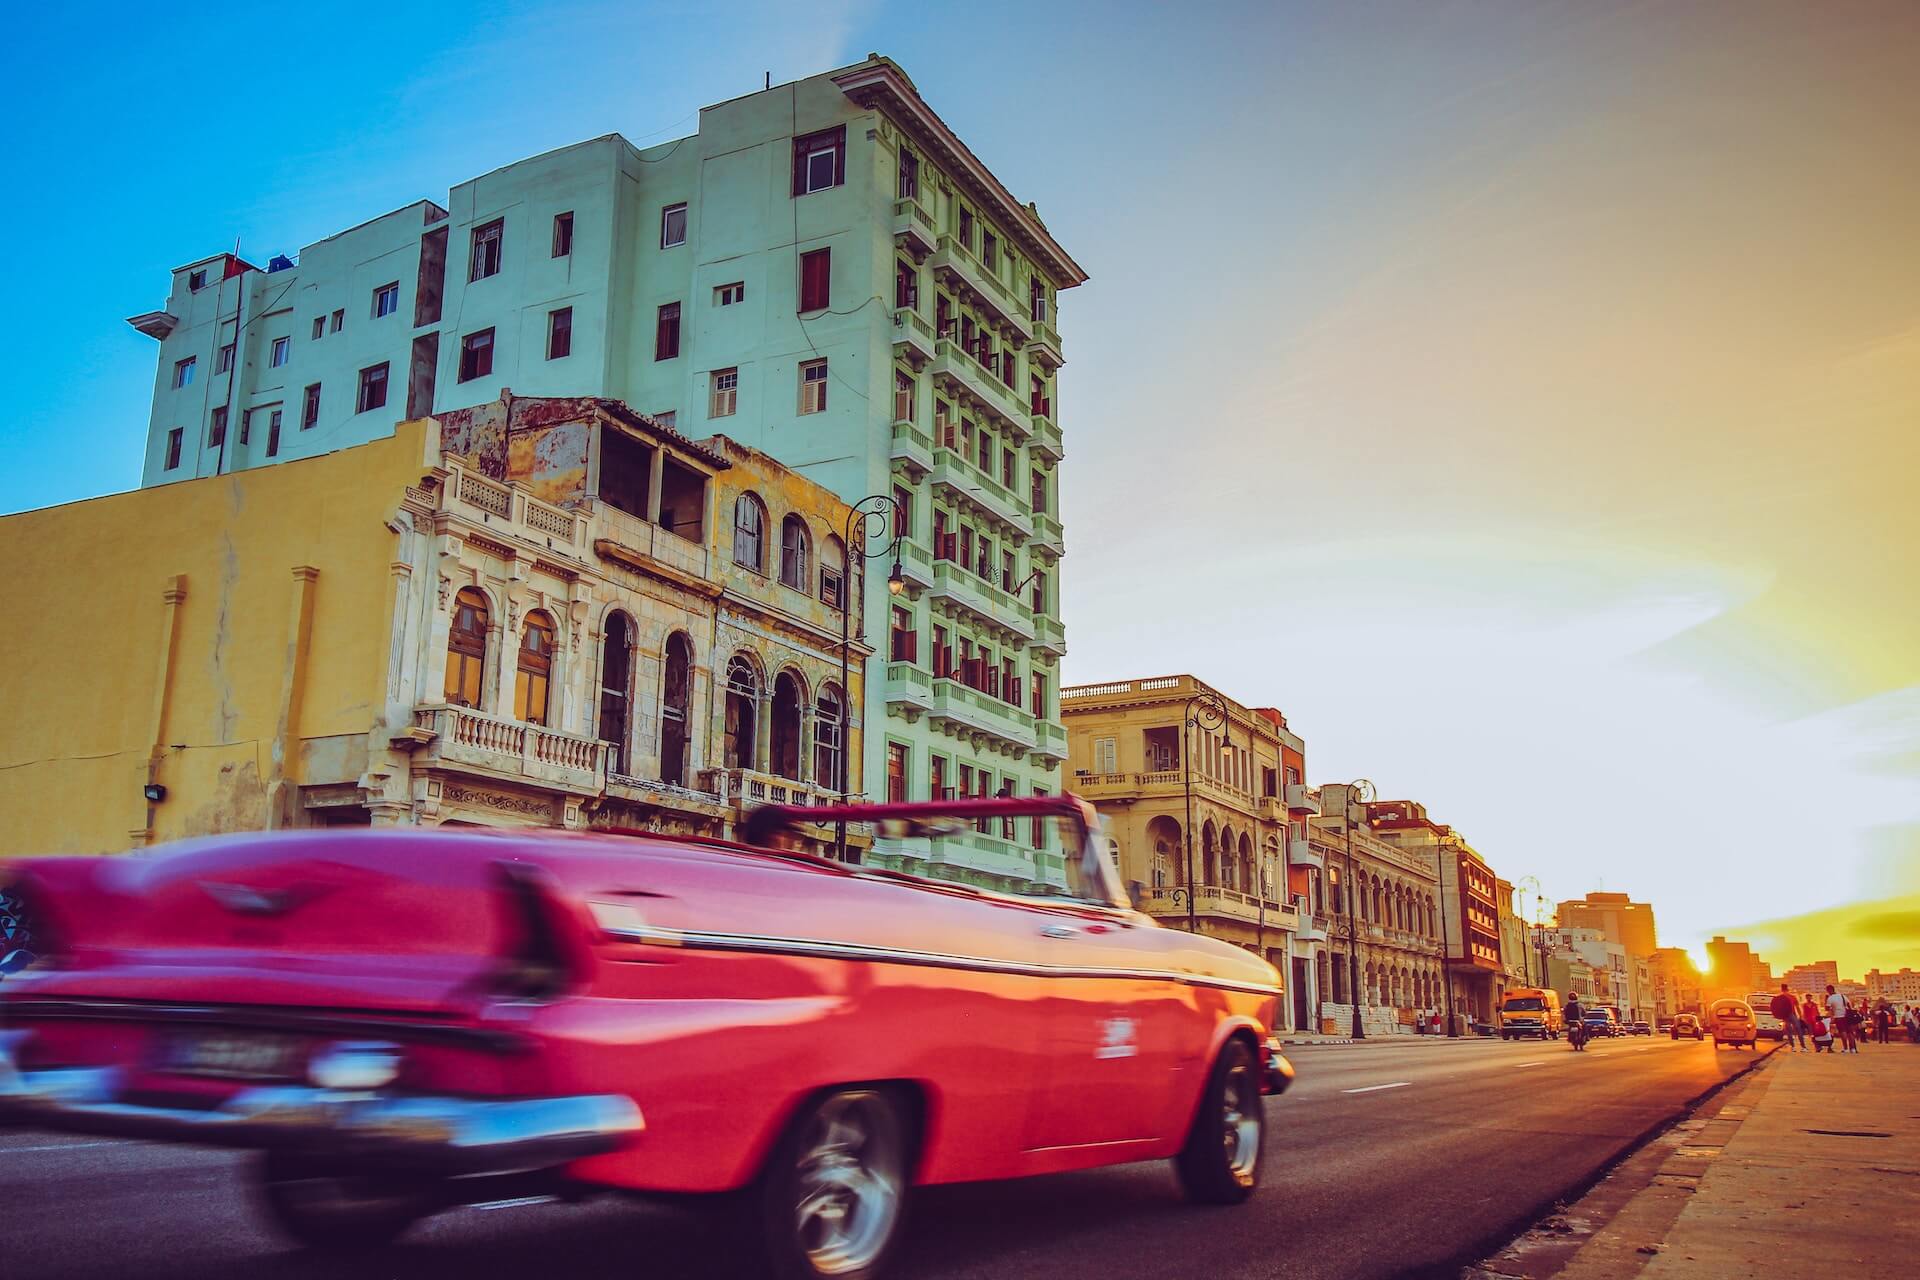 Comprehensive Destination Guide to Havana Cuba